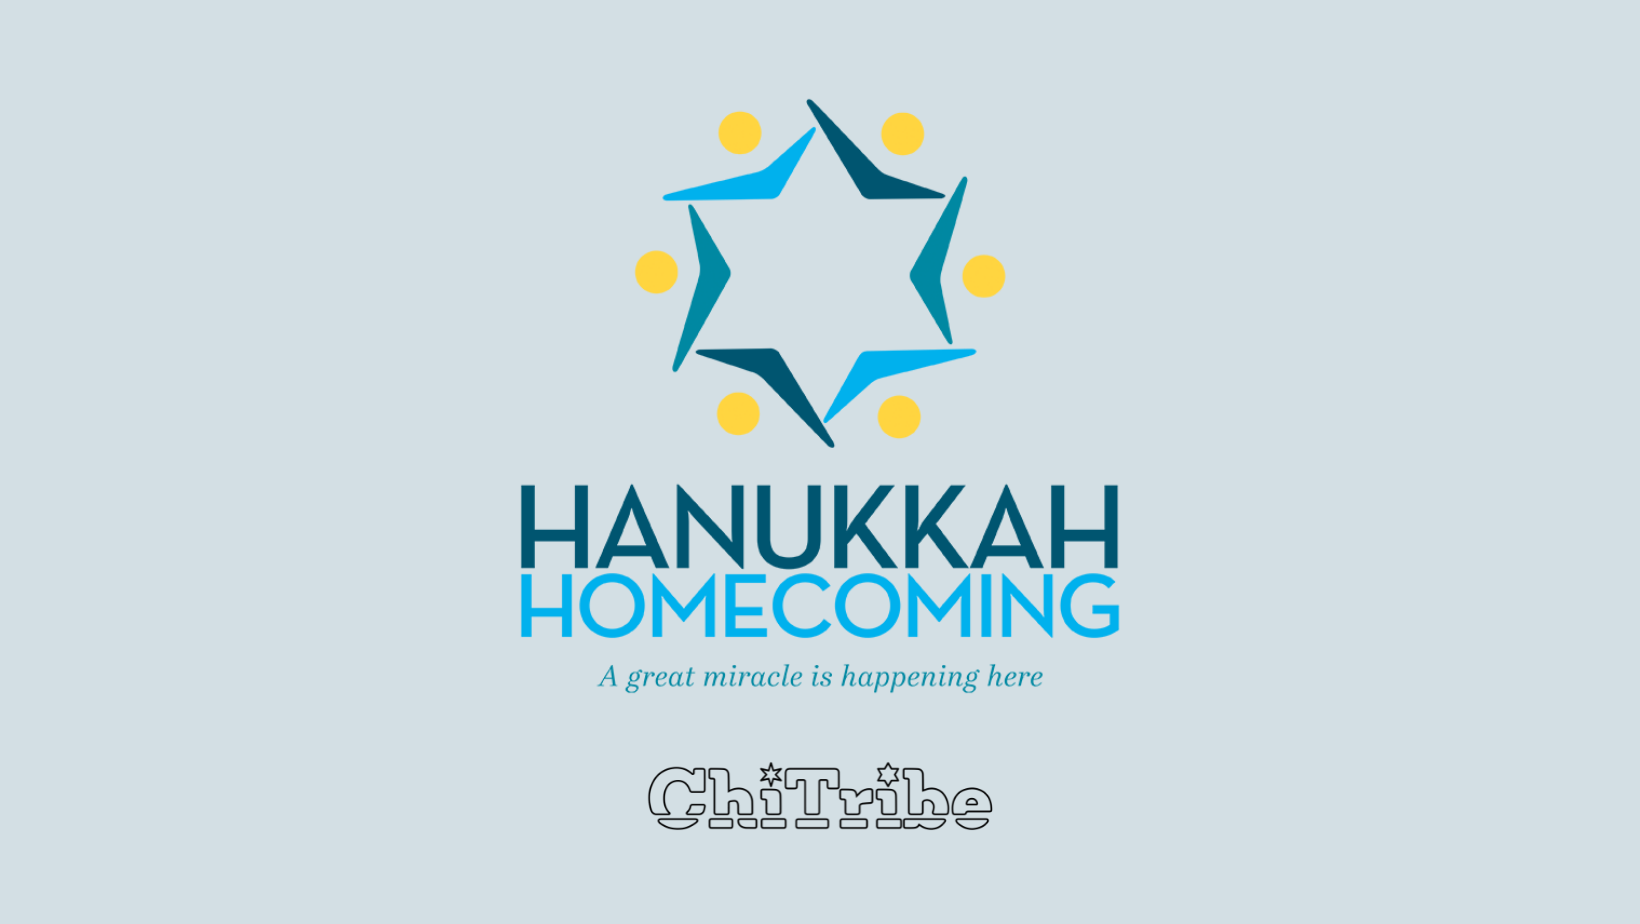 Hanukkah Homecoming